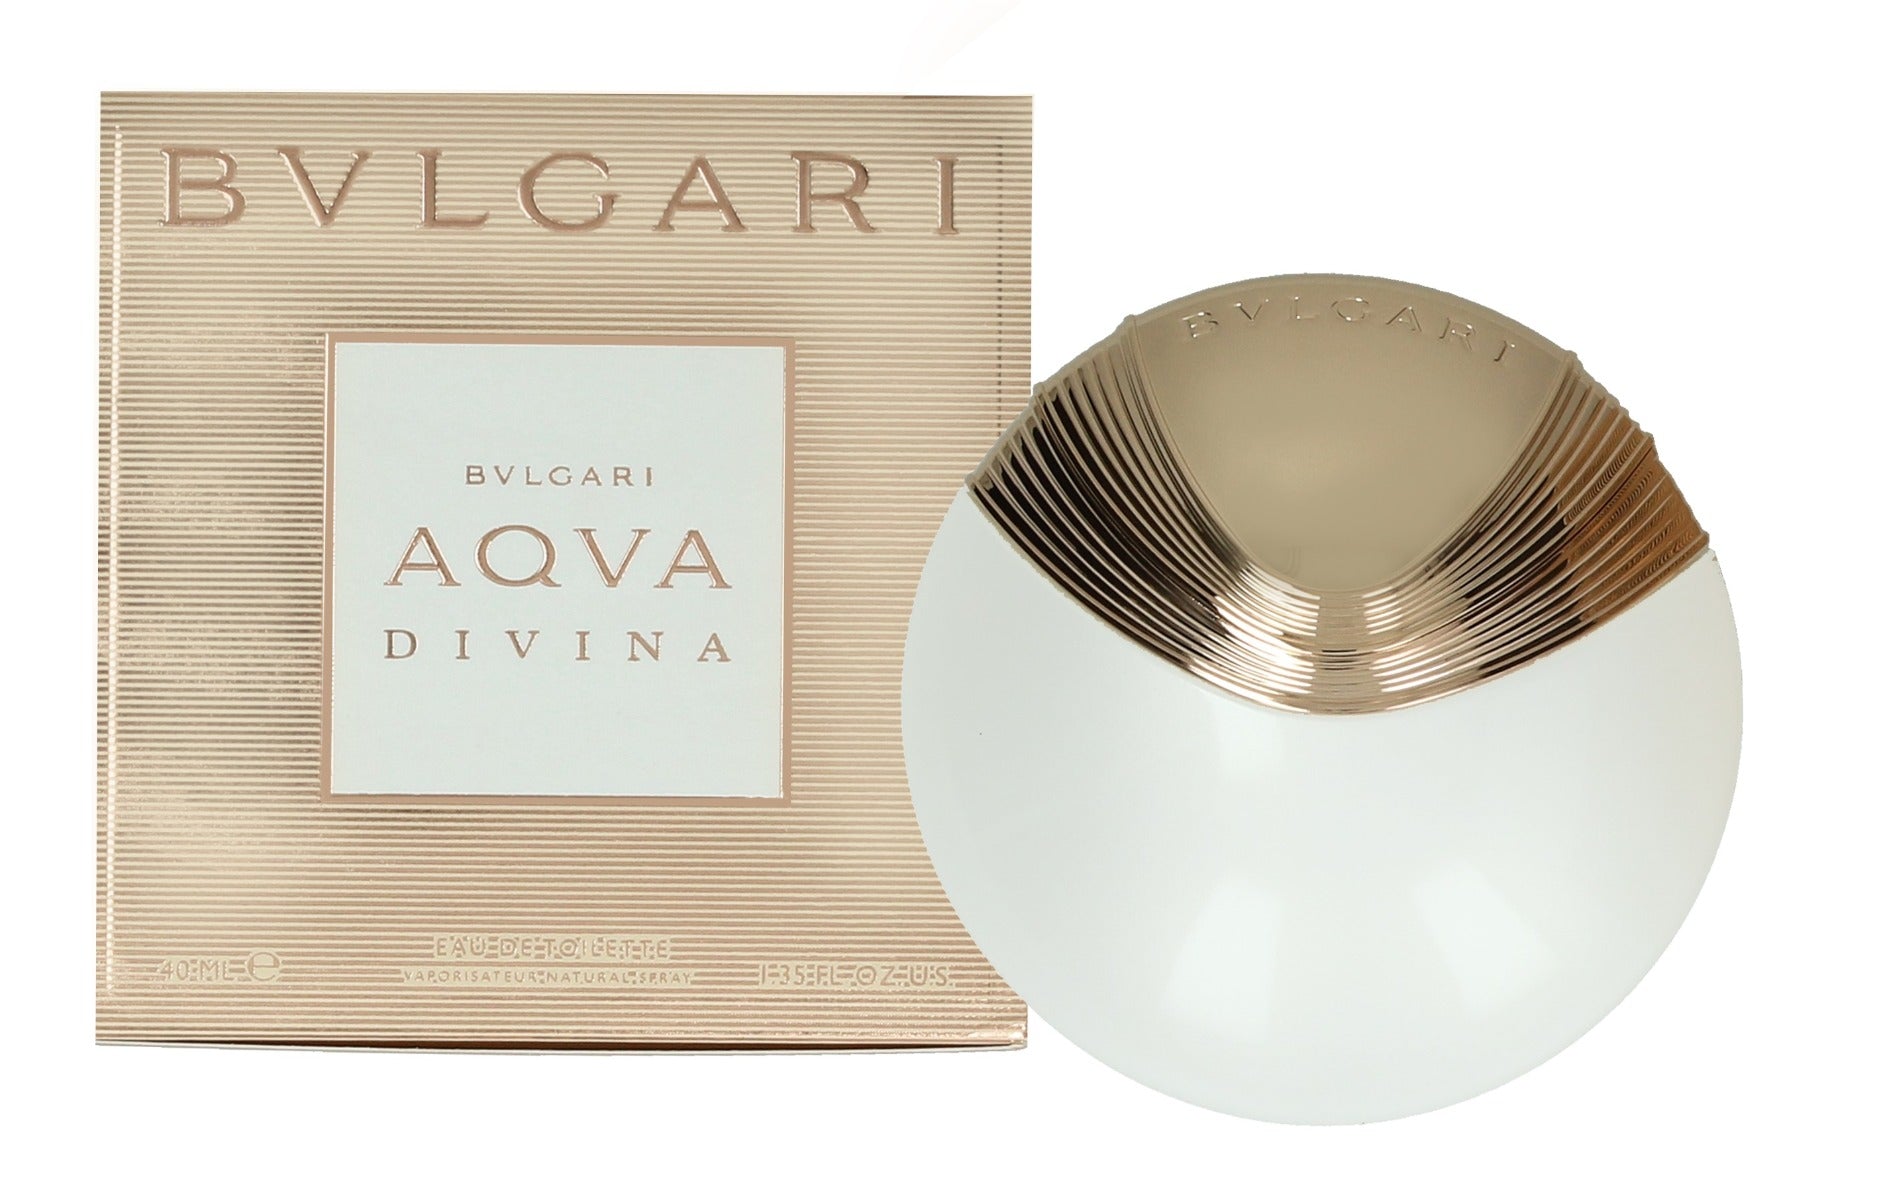 Aqva Divina by Bvlgari for Women - Eau de Toilette, 40ml - samawa perfumes 